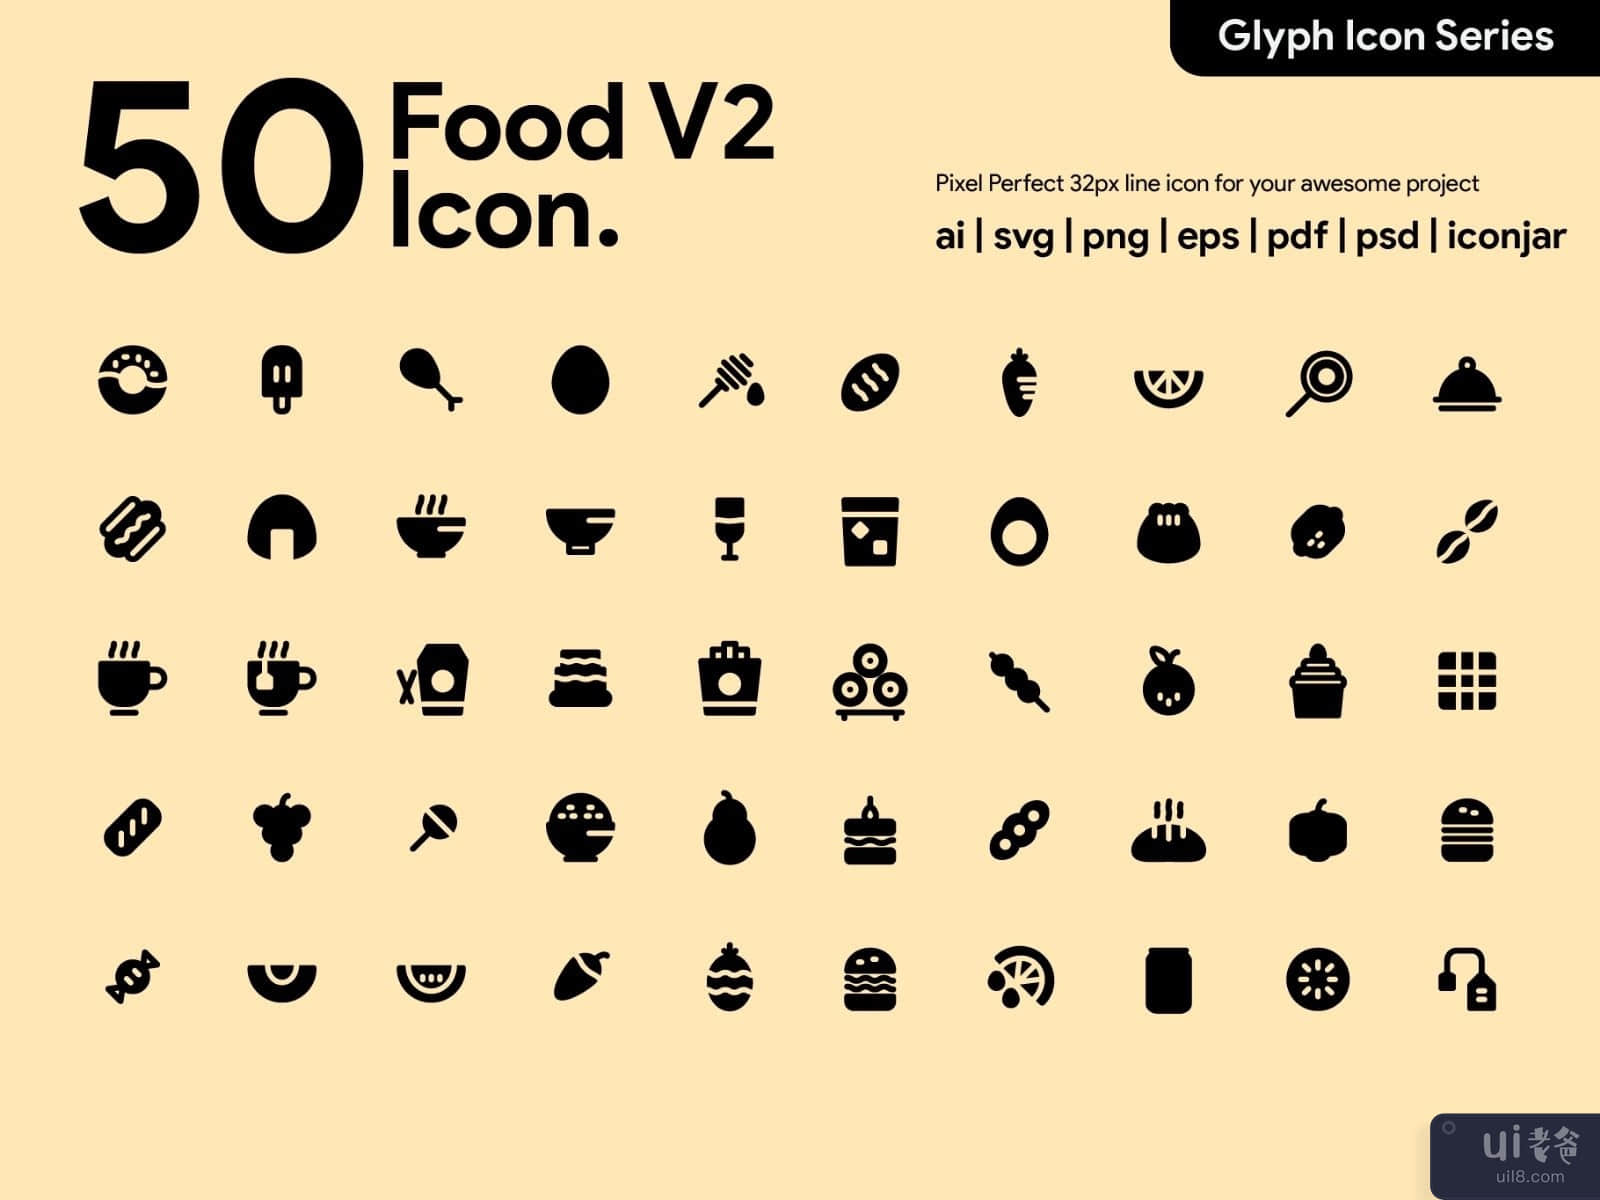 Kawaicon - 50 Food Glyph Icon Set